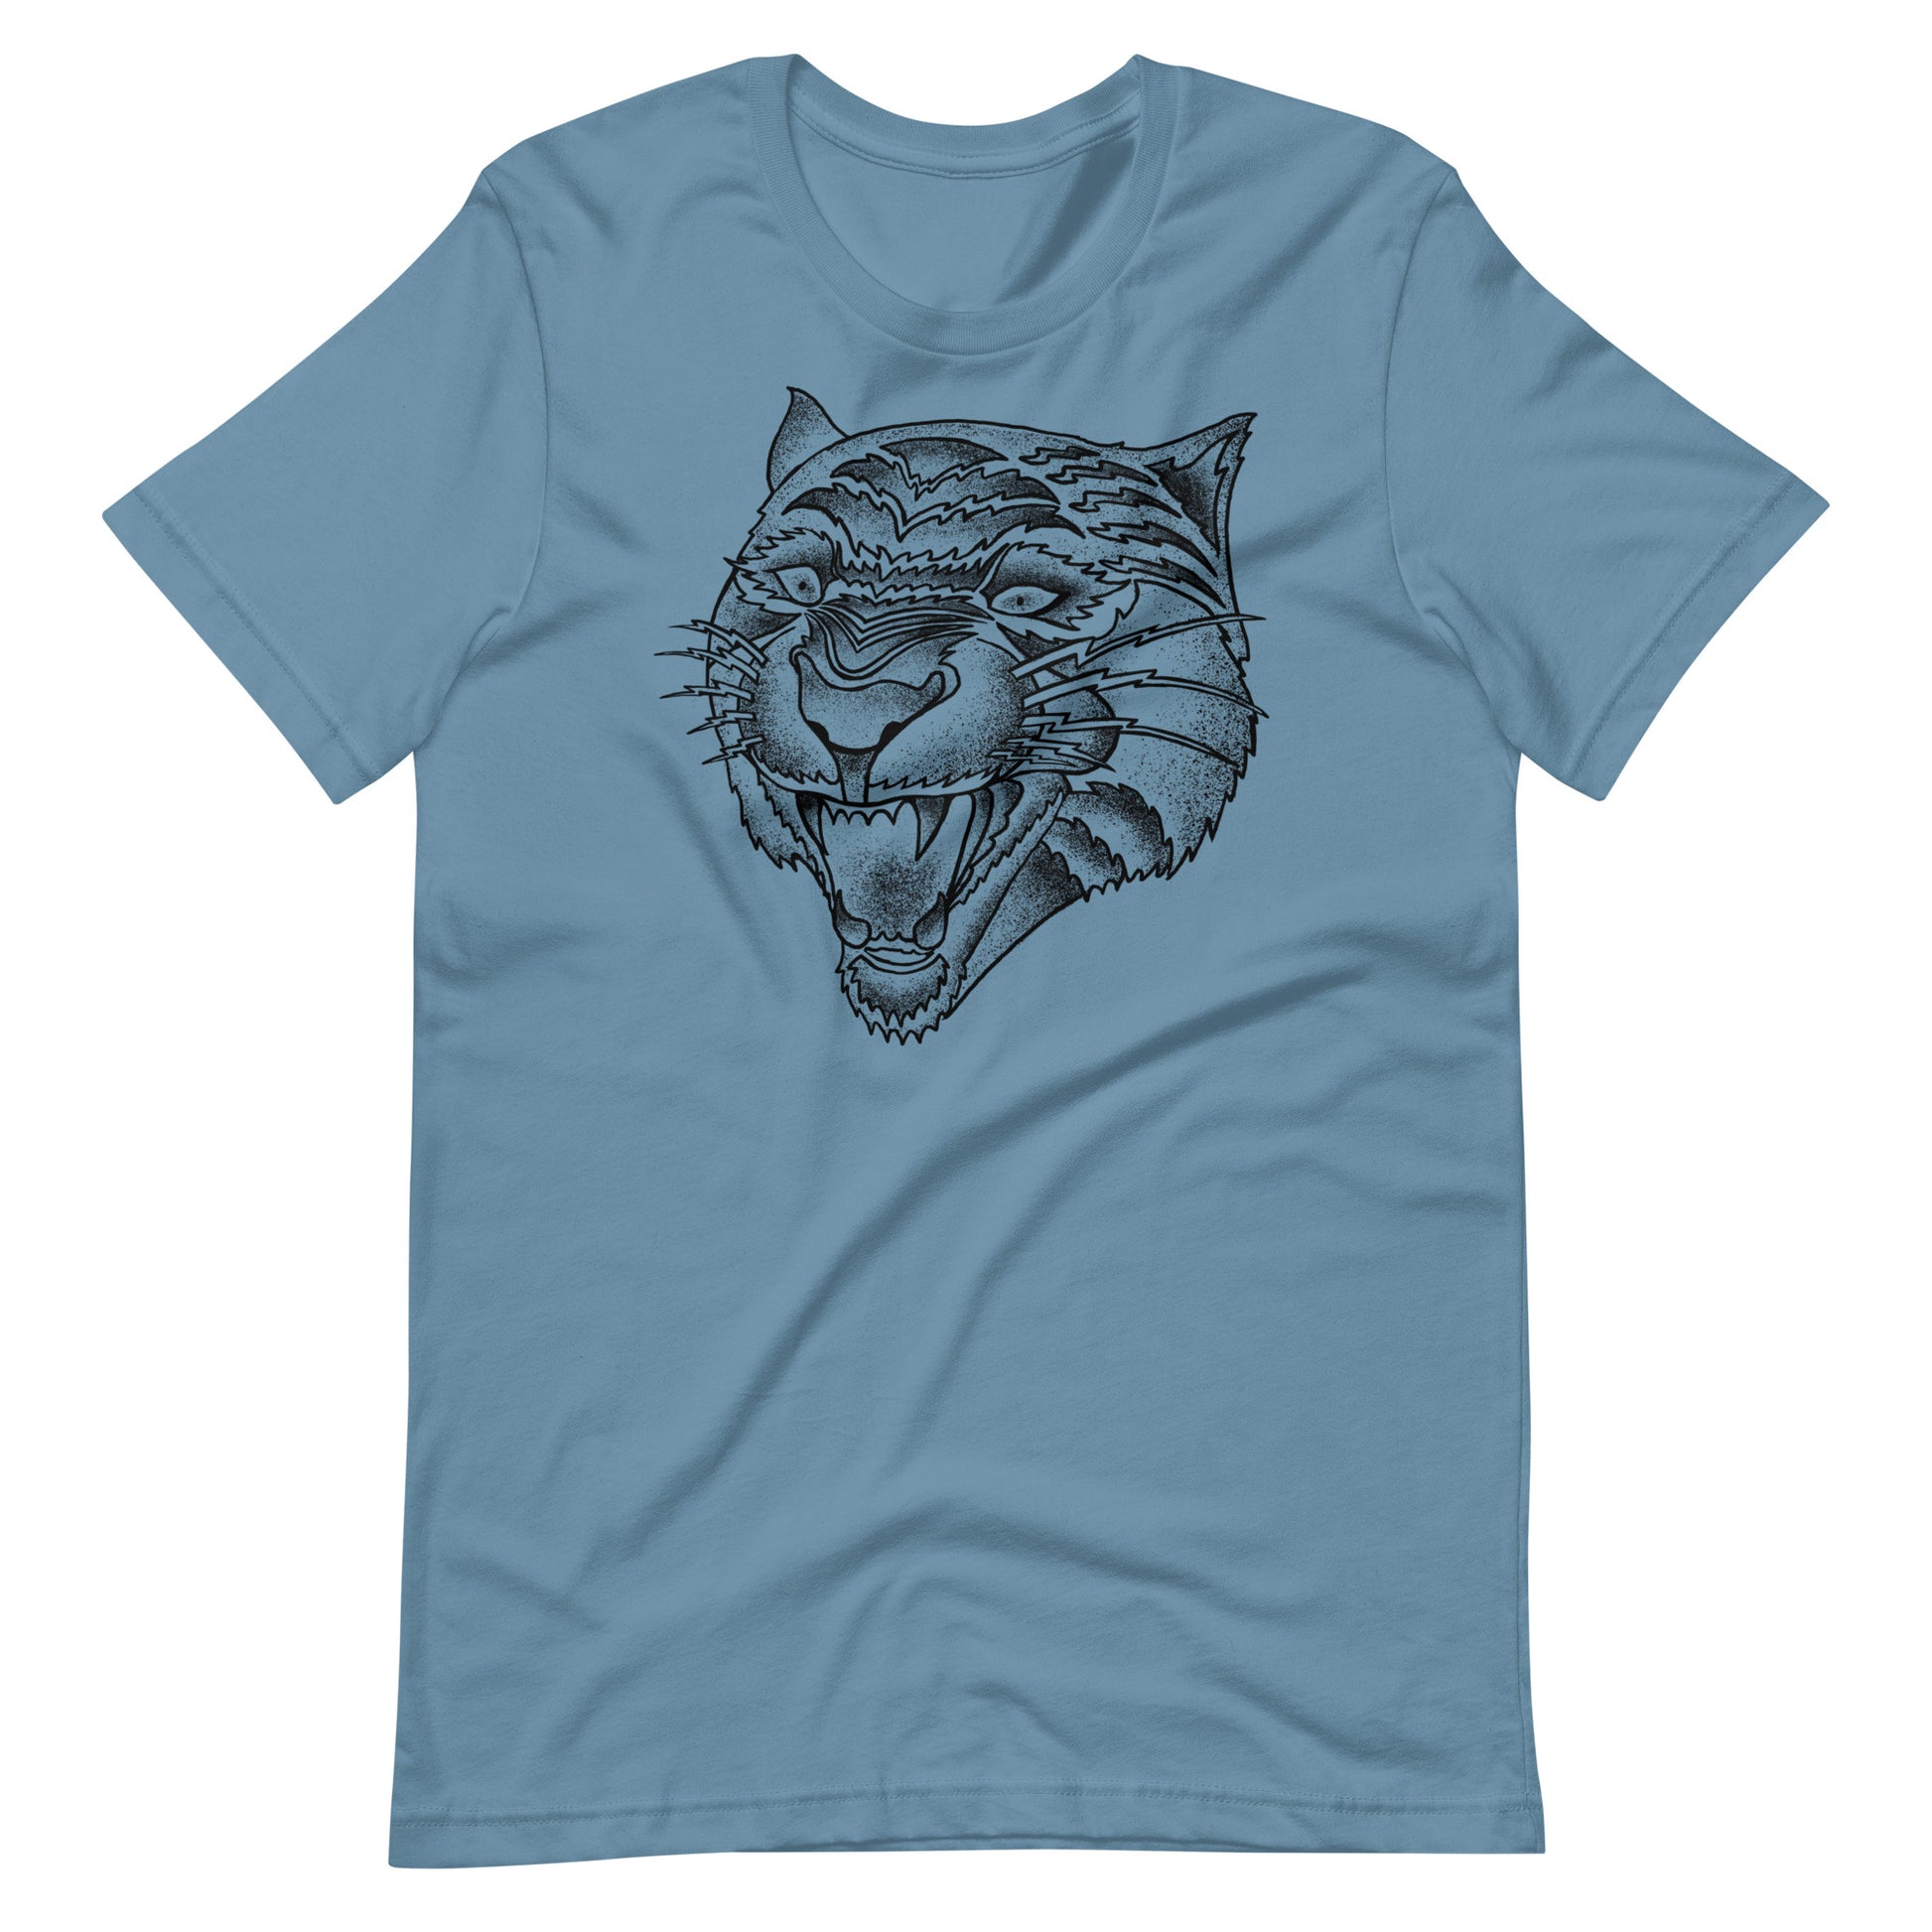 Panther Black - Men's t-shirt - Steel Blue Front